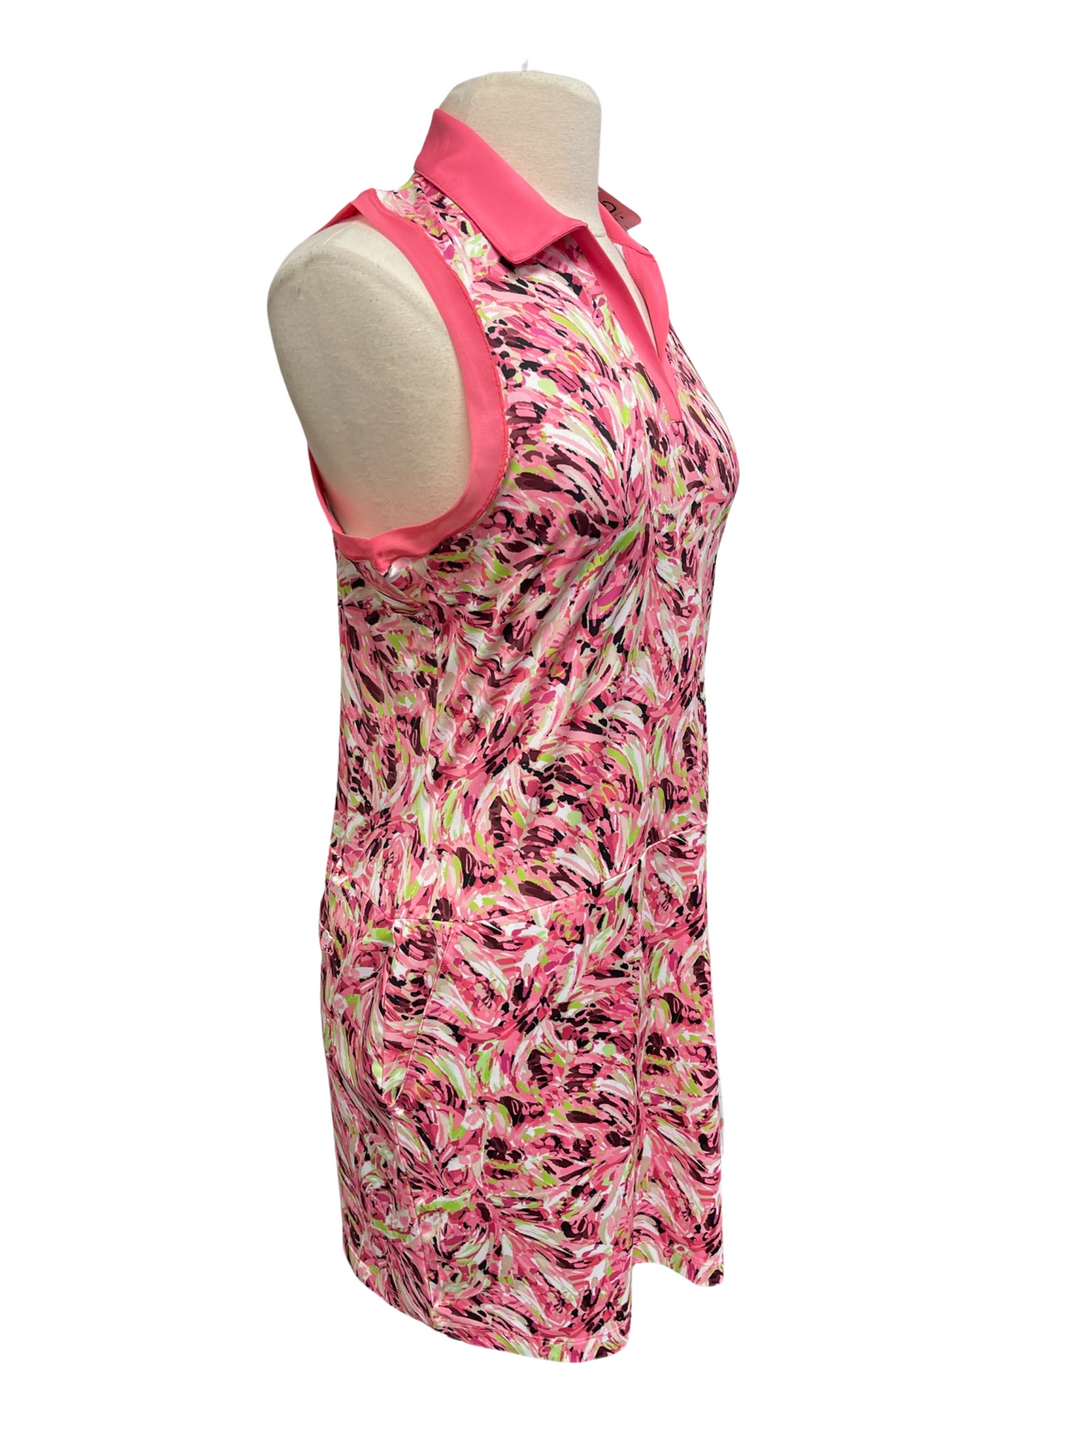 EP New York S/L Ruby Floral Peach Racer Back Polo Dress- Medium